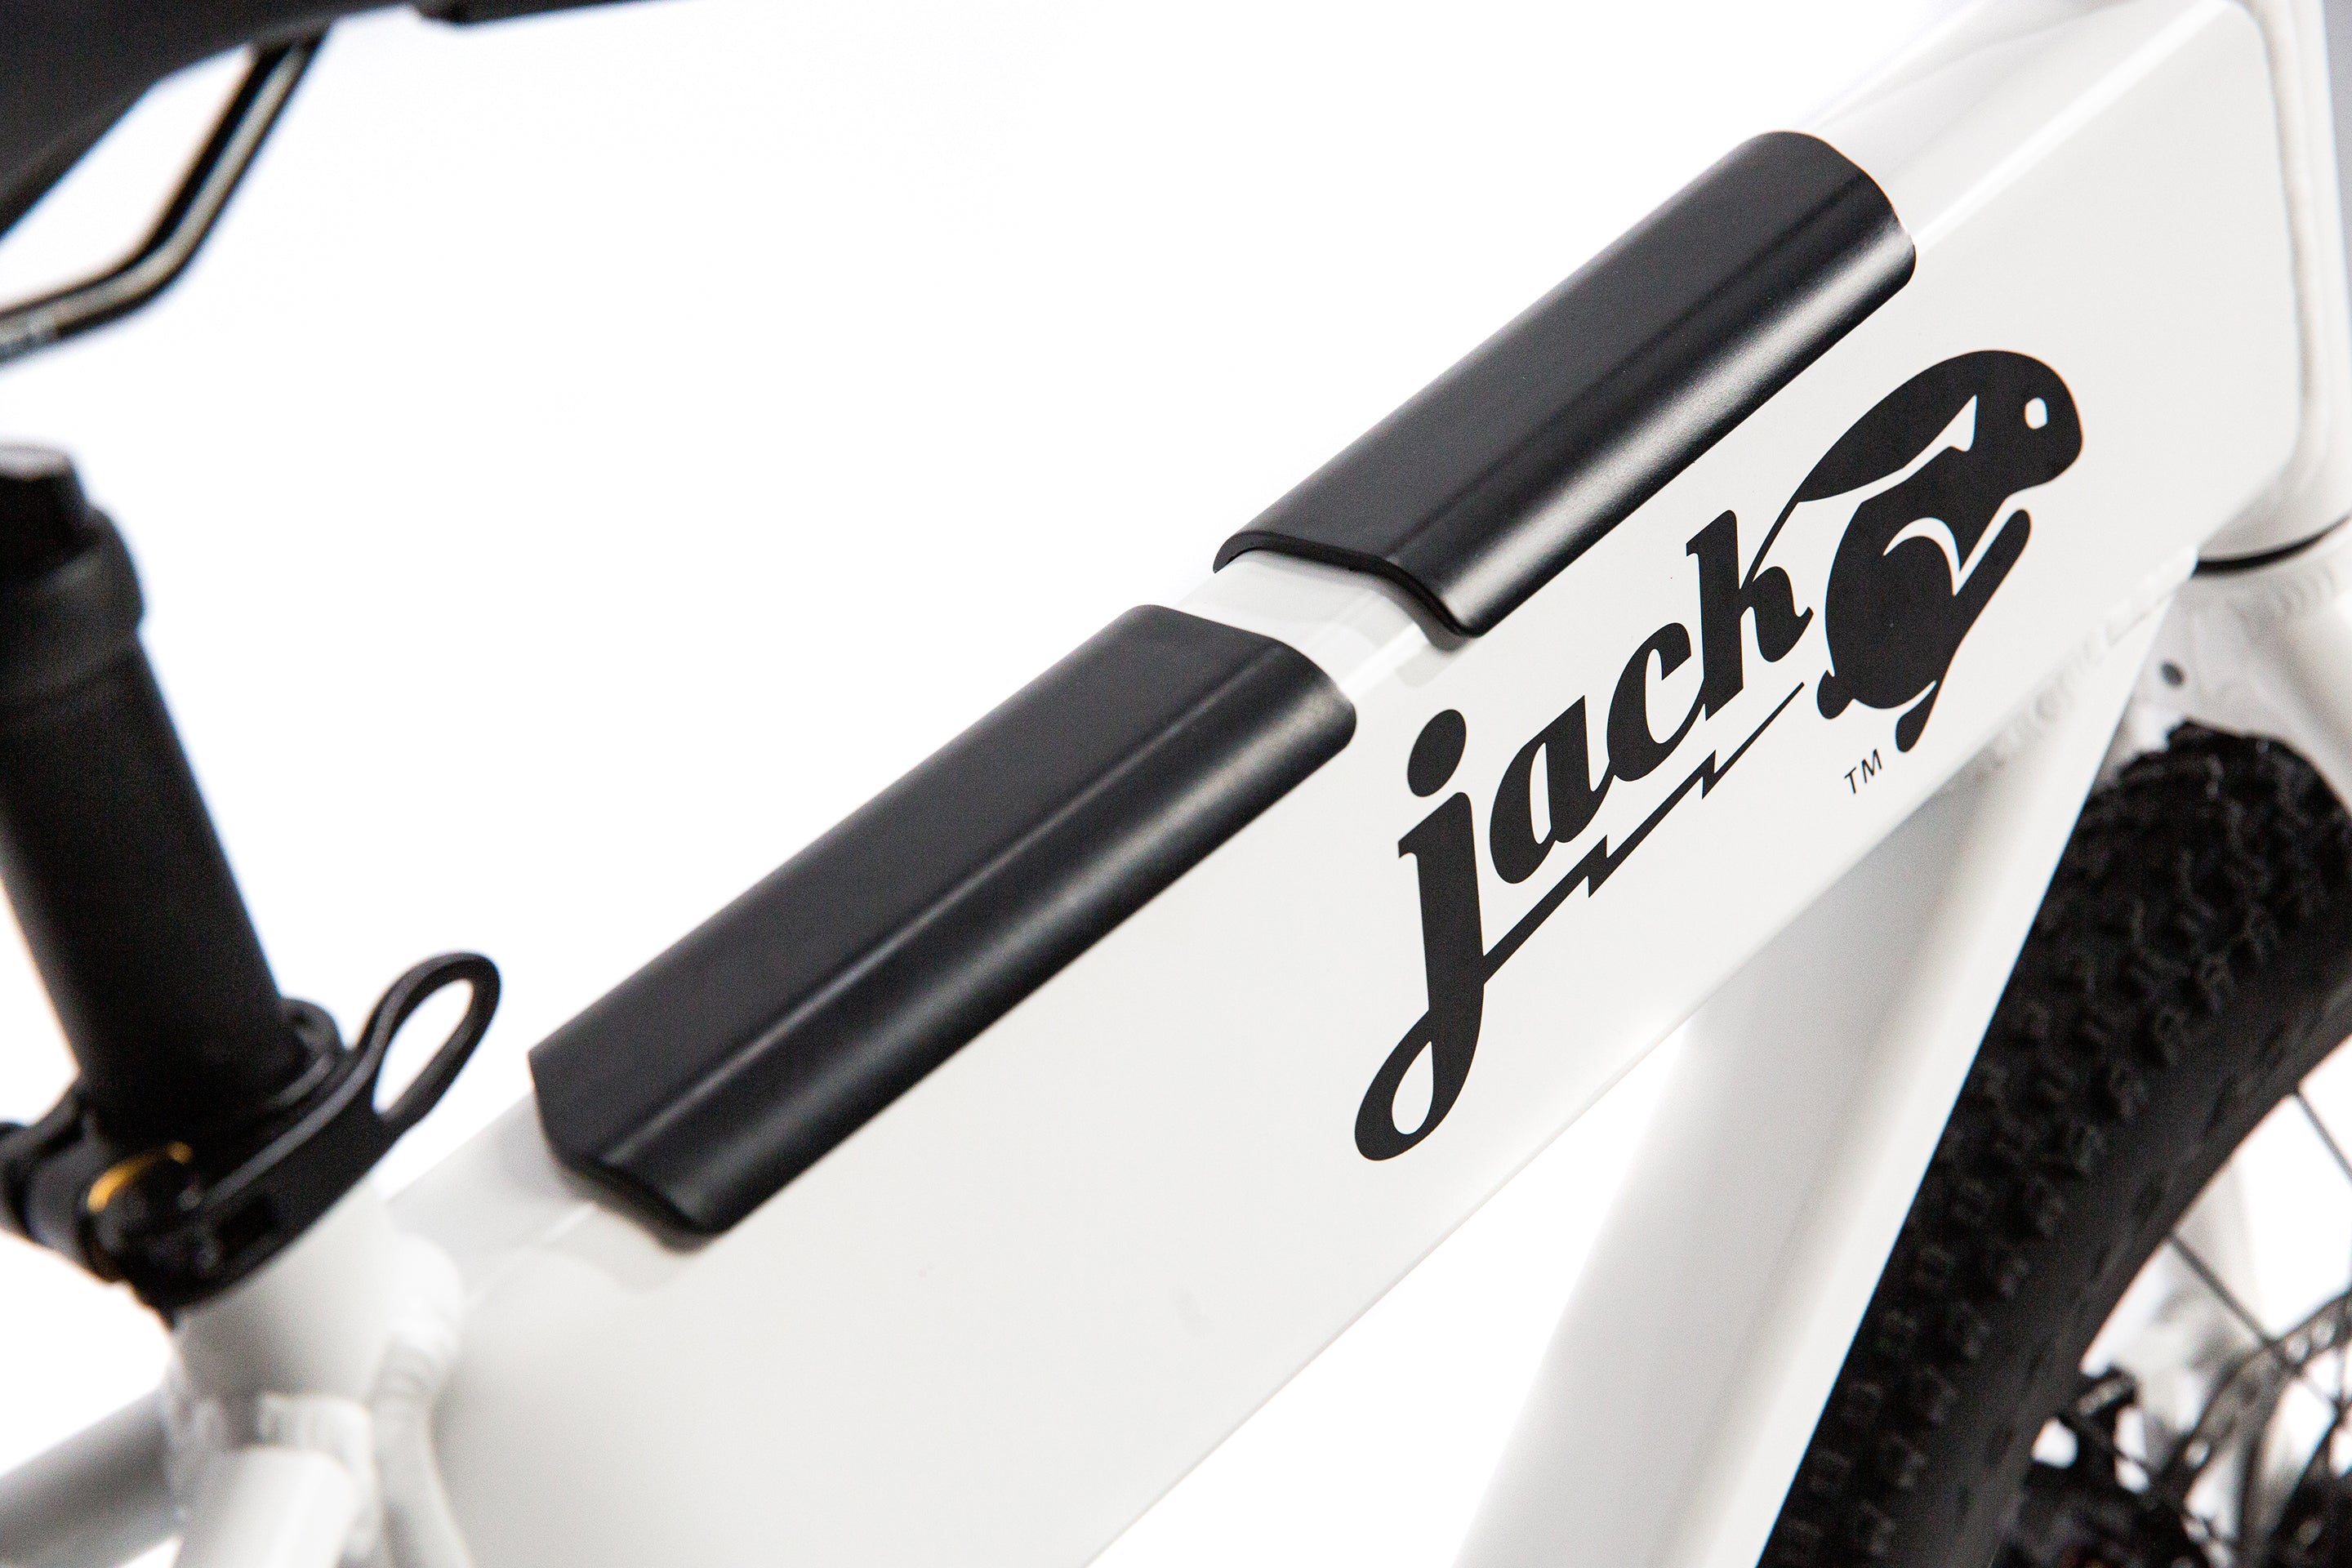 JackRabbit XG - Lightweight & Compact XL Micro eBike, White